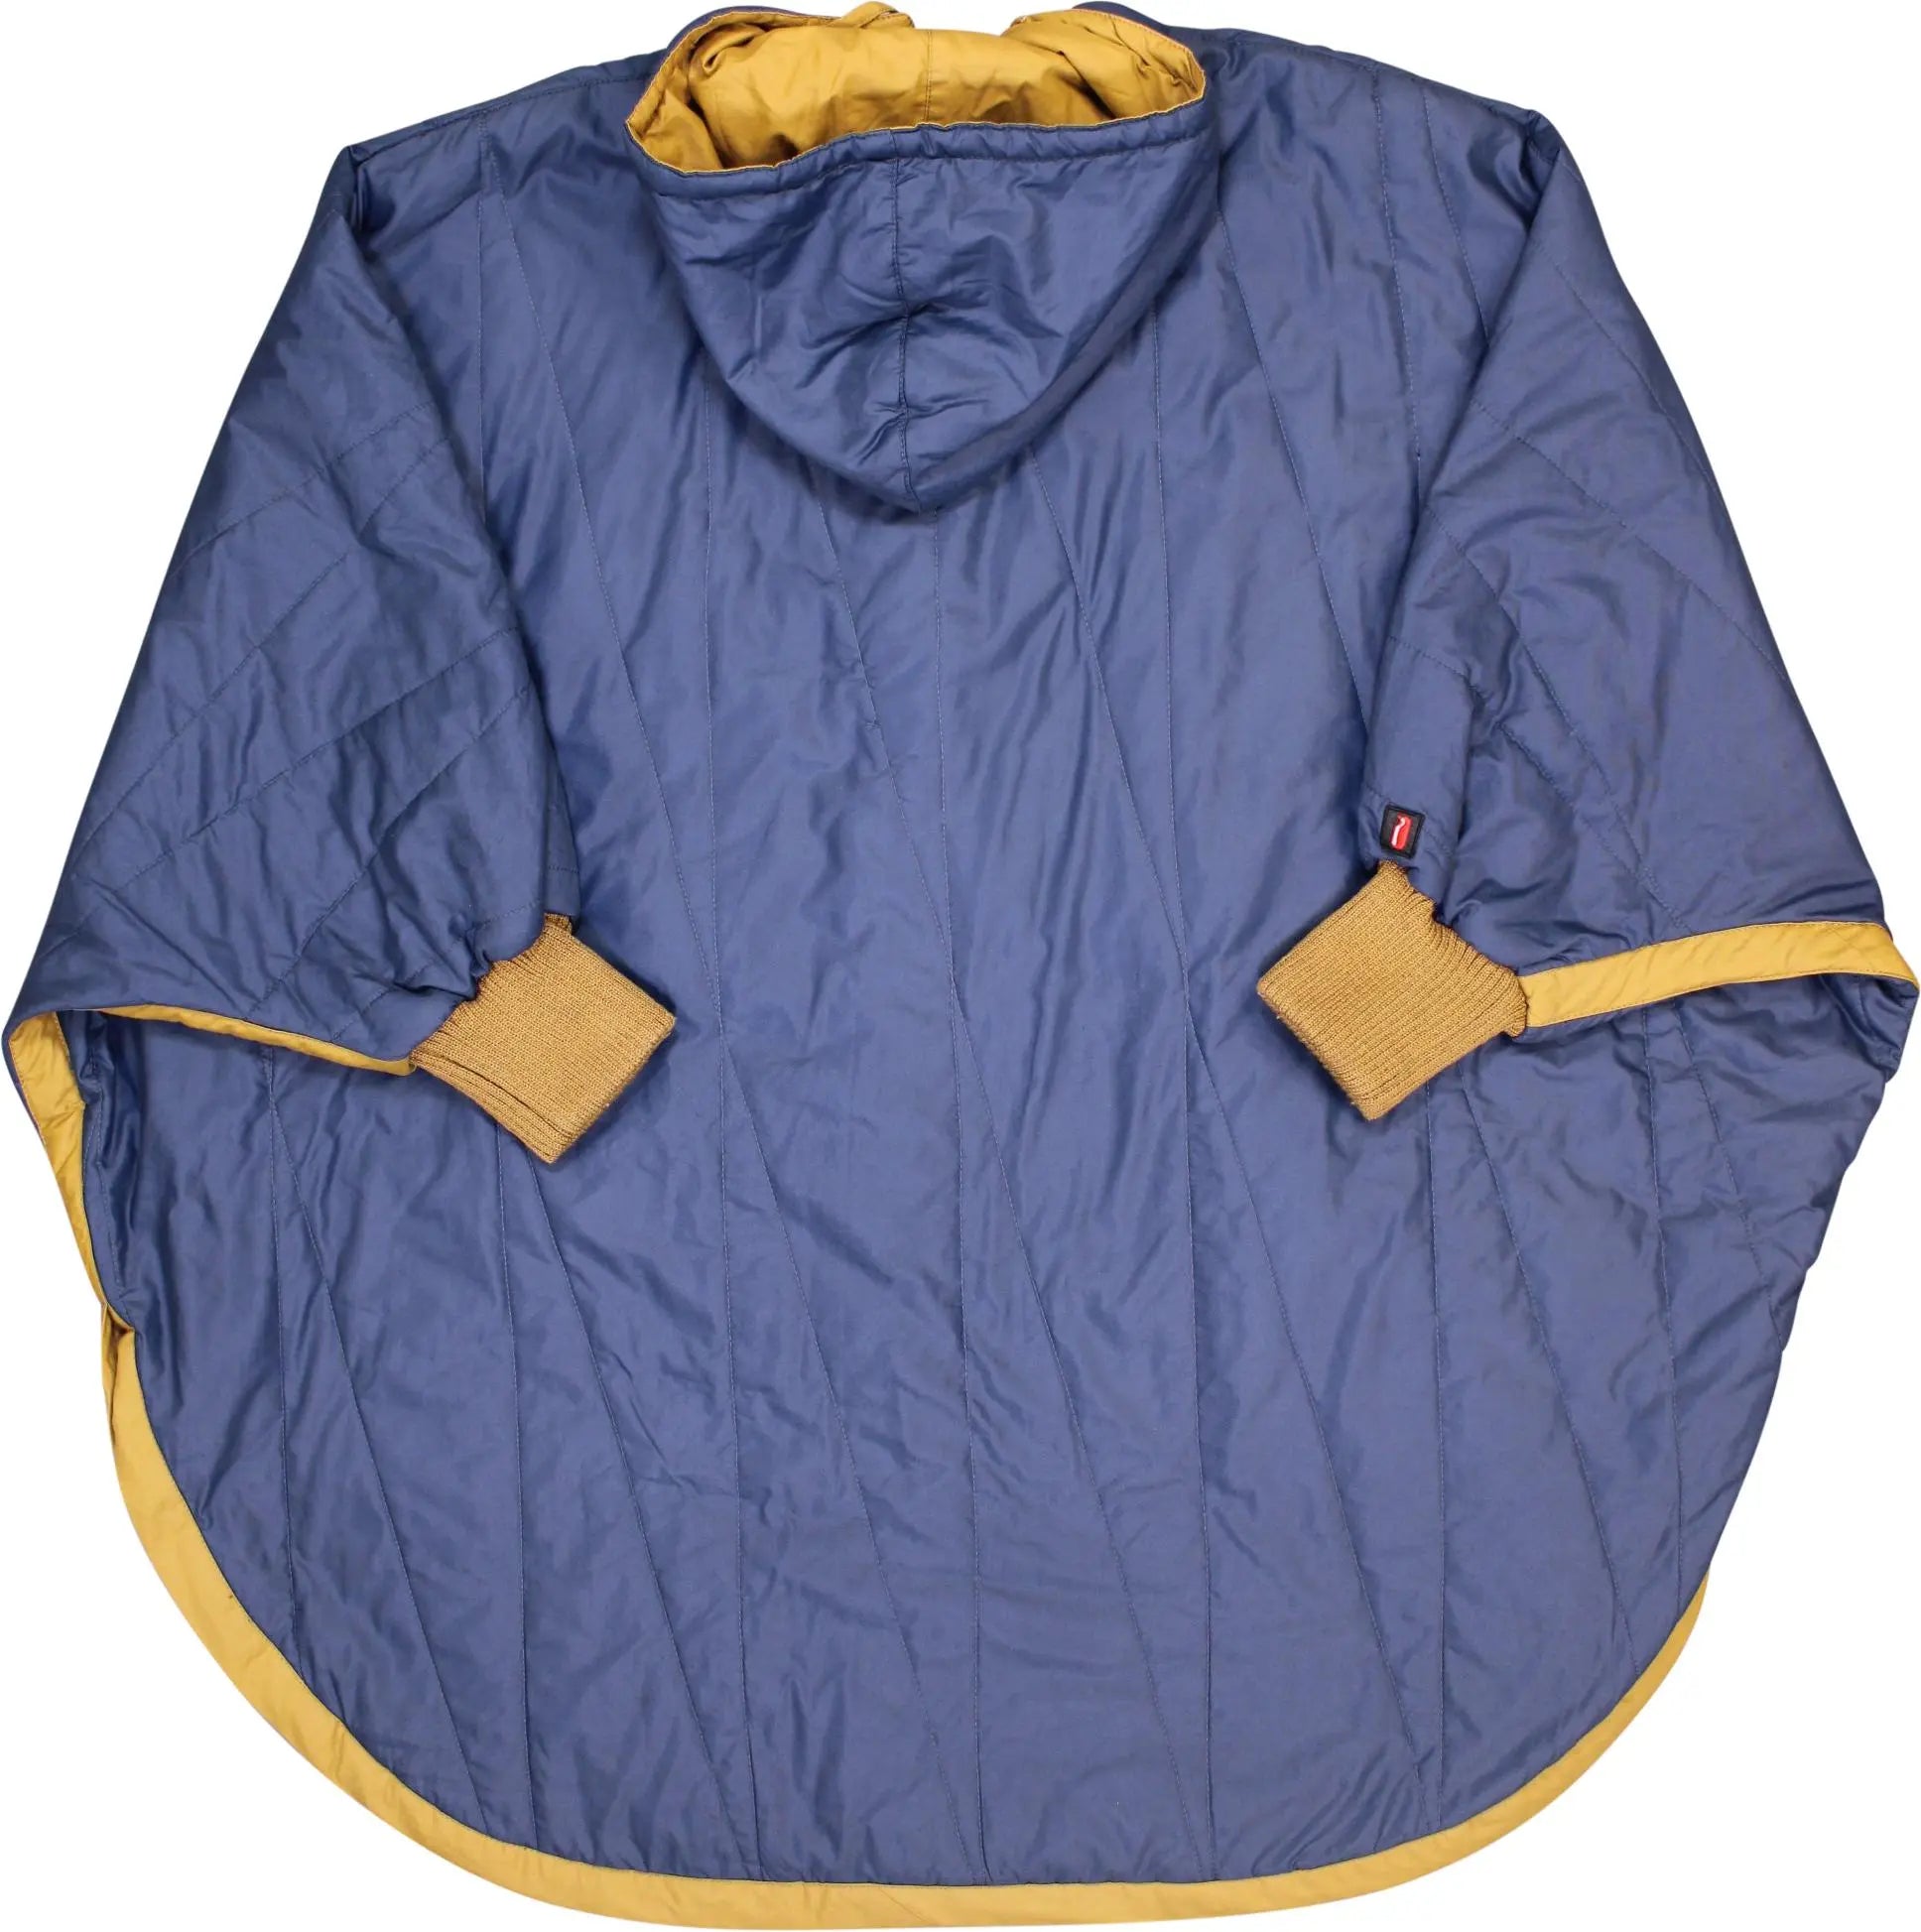 Ellesse - Blue Coat by Ellesse- ThriftTale.com - Vintage and second handclothing